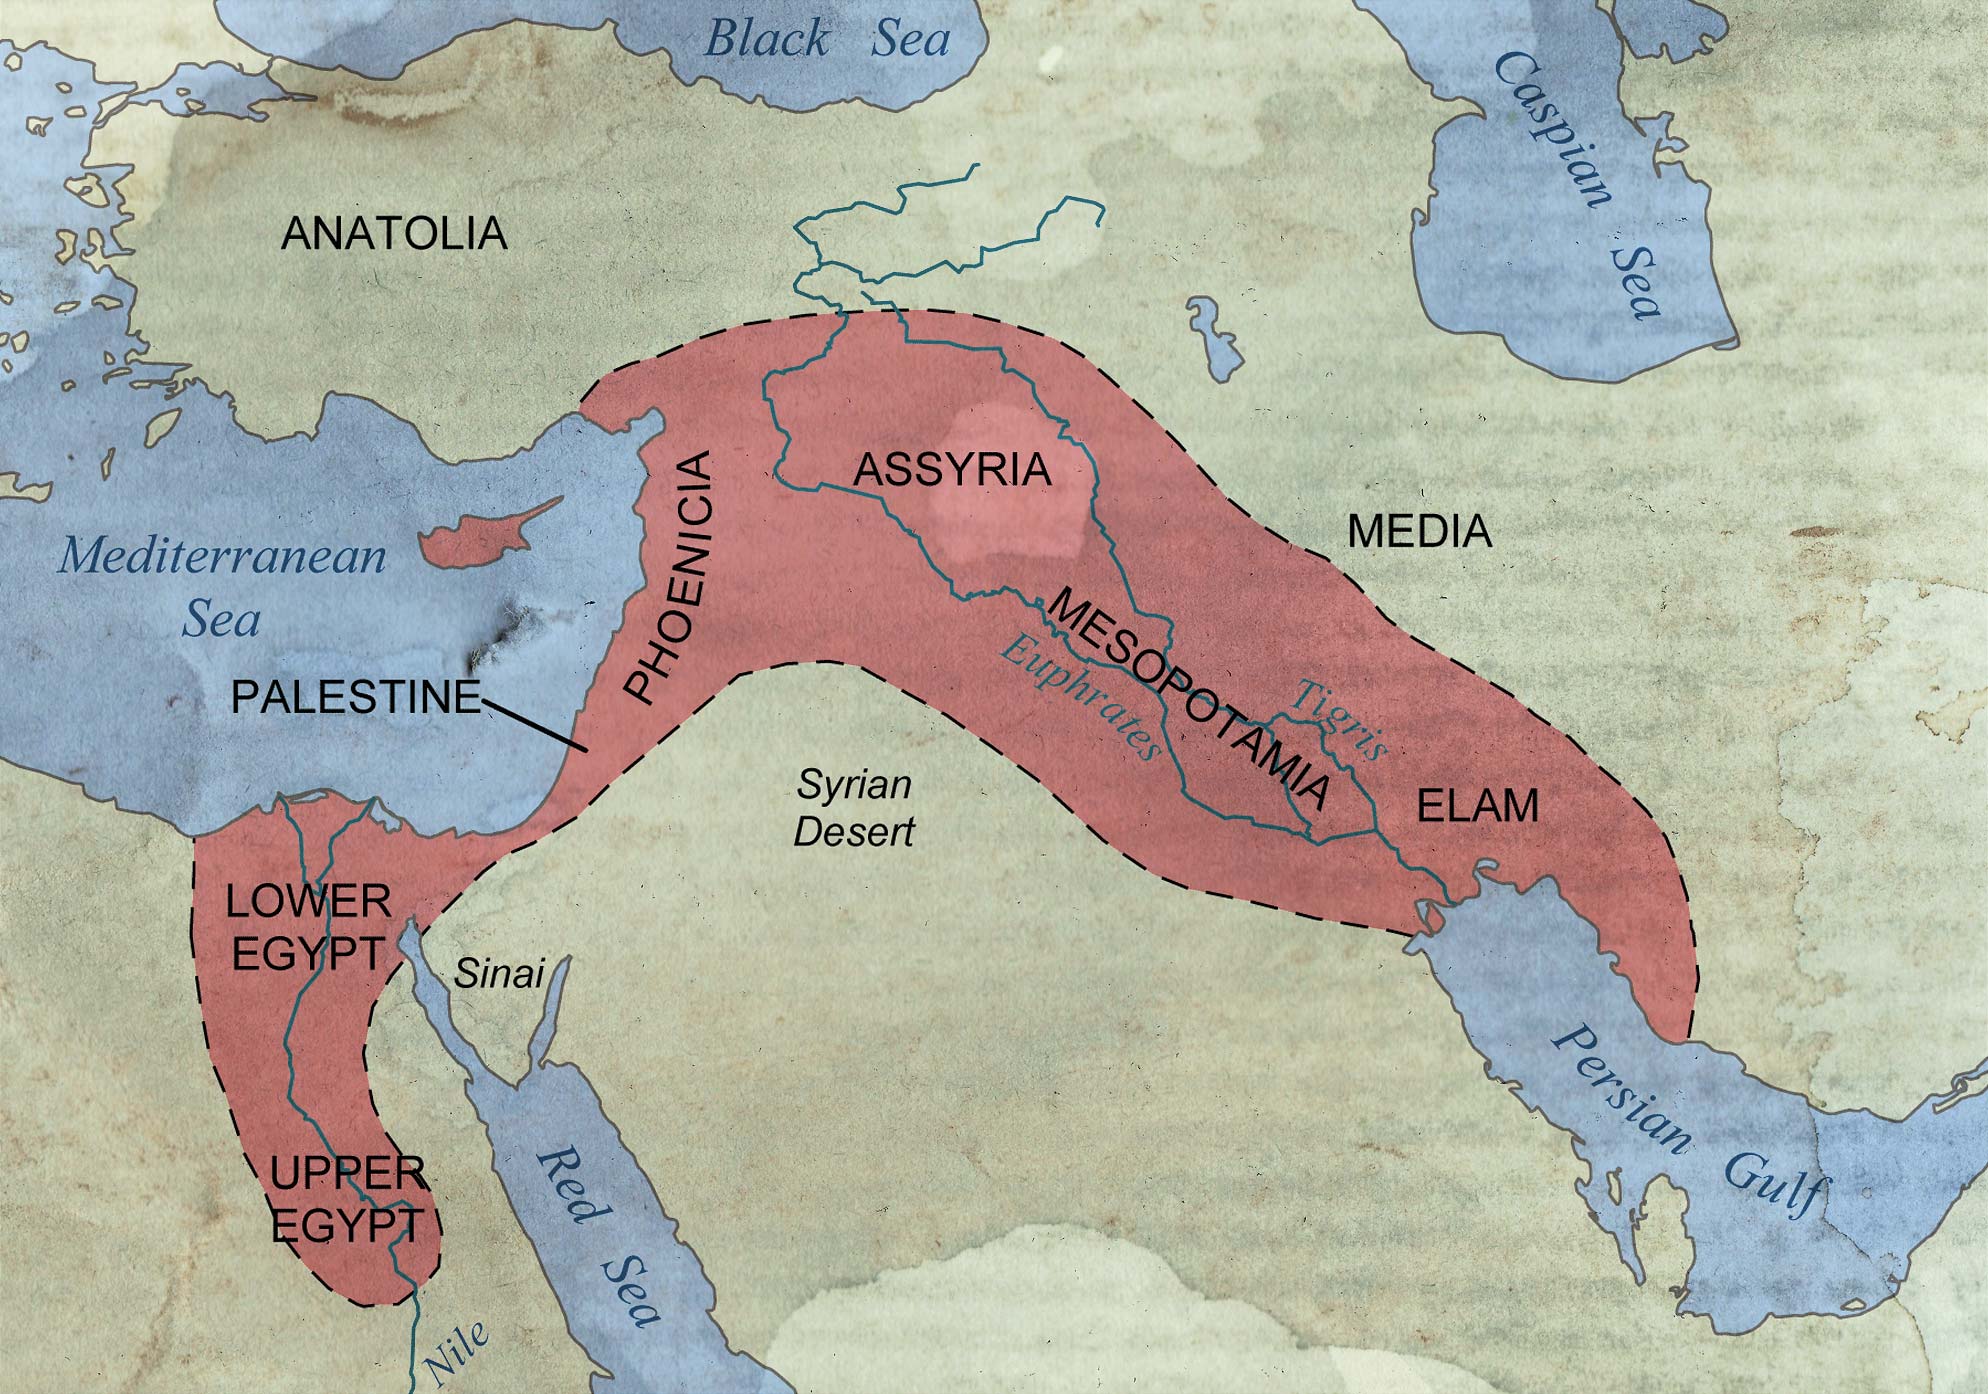 The Fertile Crescent encompasses parts of Egypt, Israel, Jordan, Lebanon, Syria and Iraq